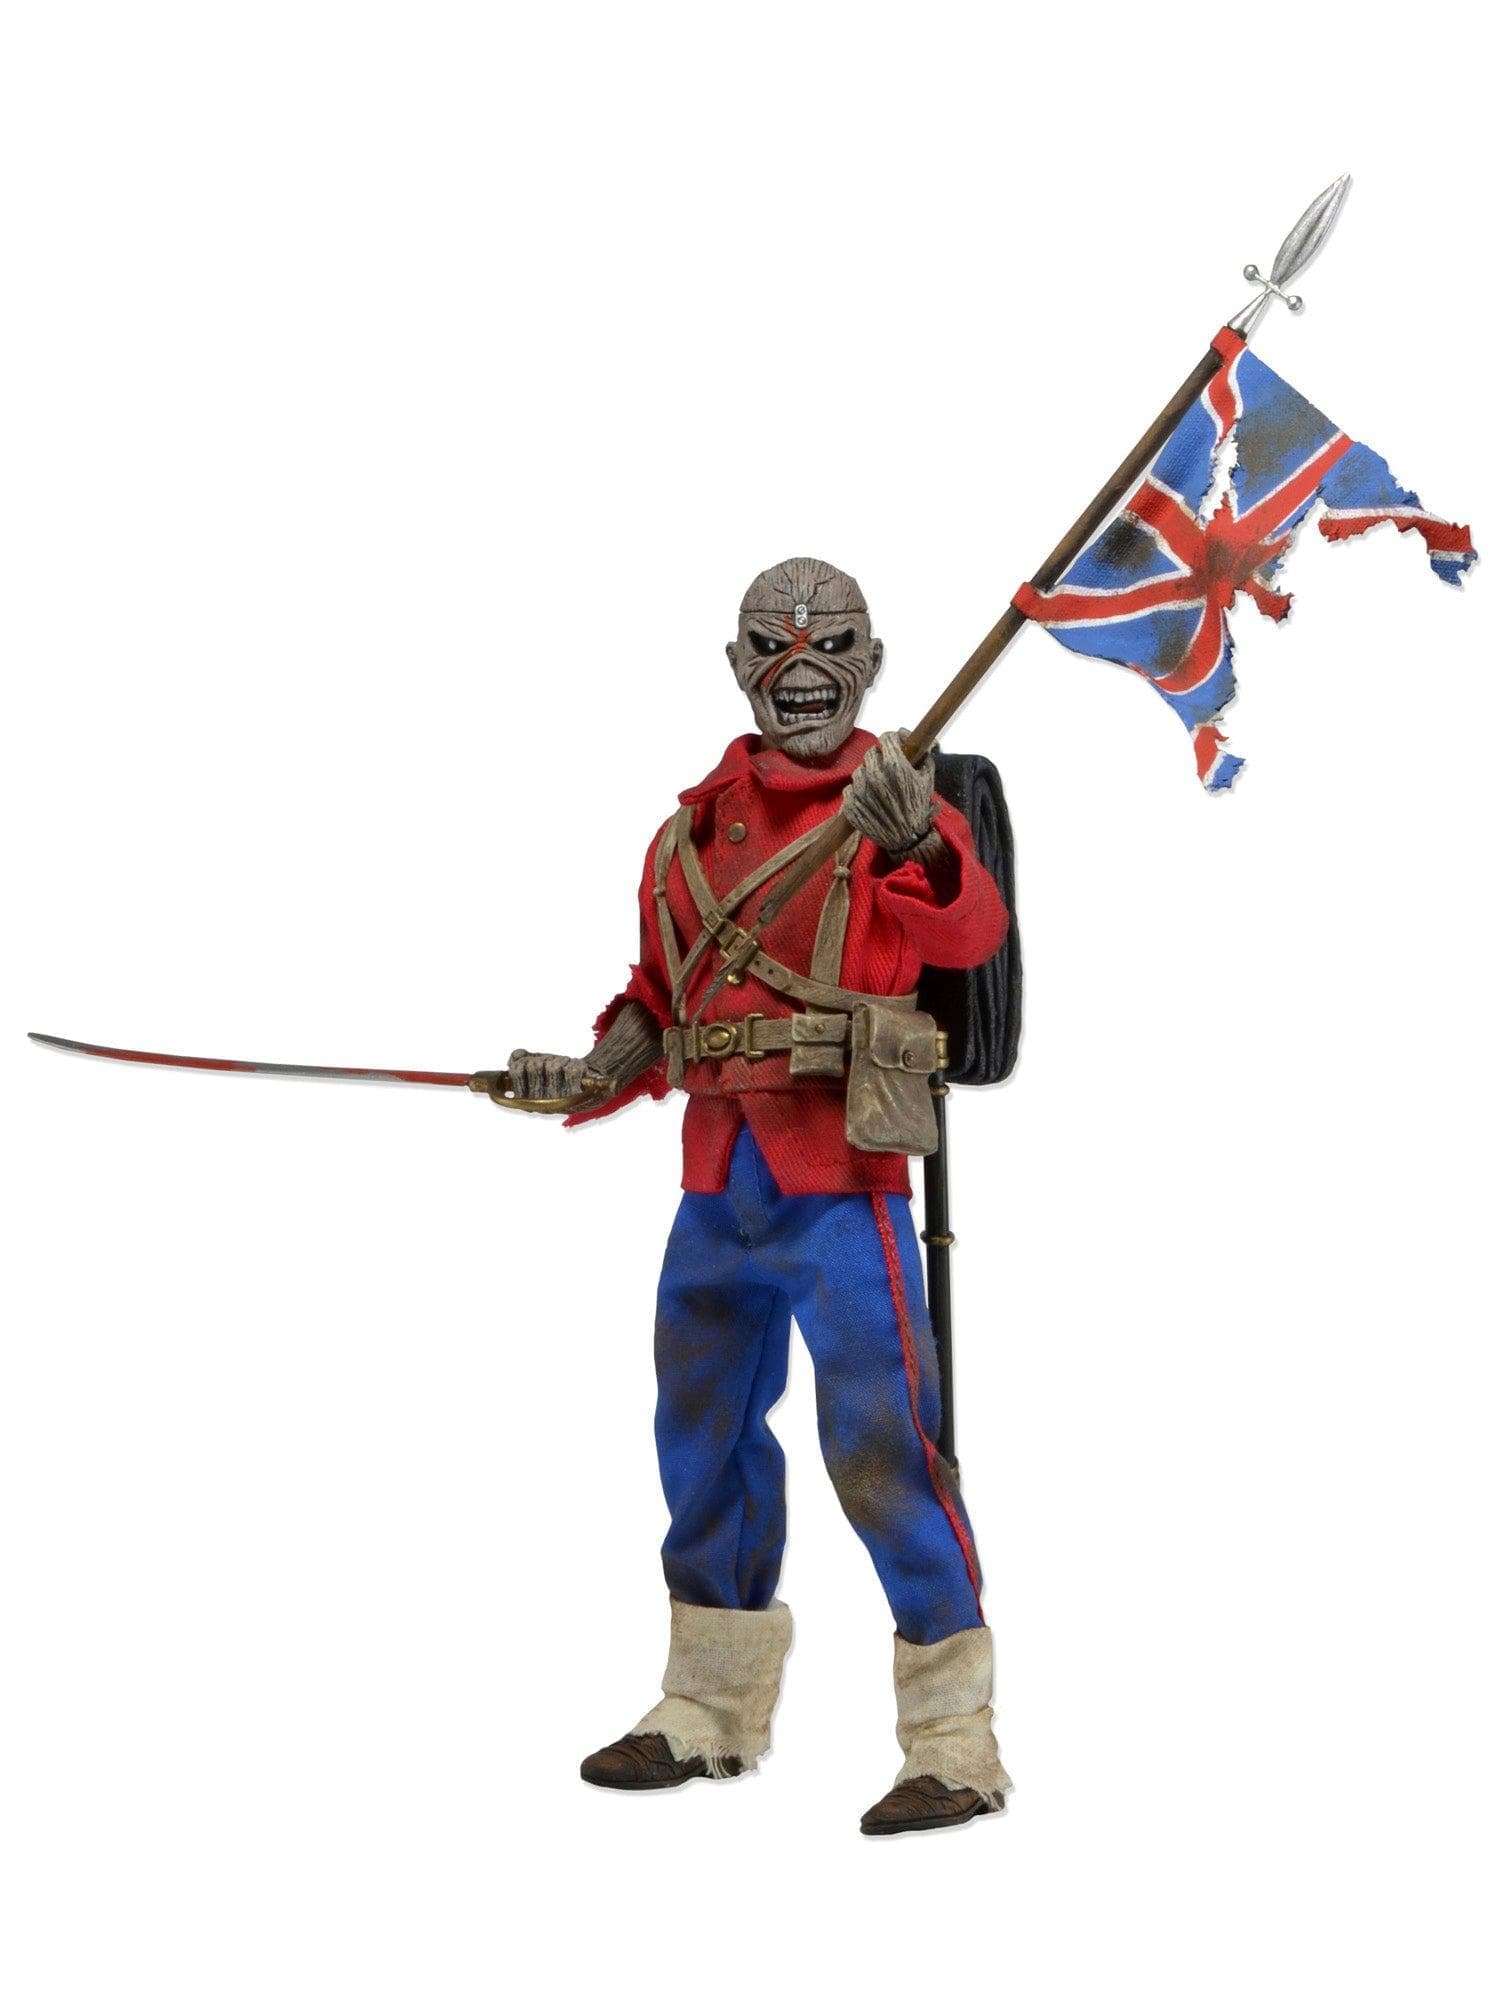 NECA - Iron Maiden - 8" Clothed Figure - Trooper - costumes.com